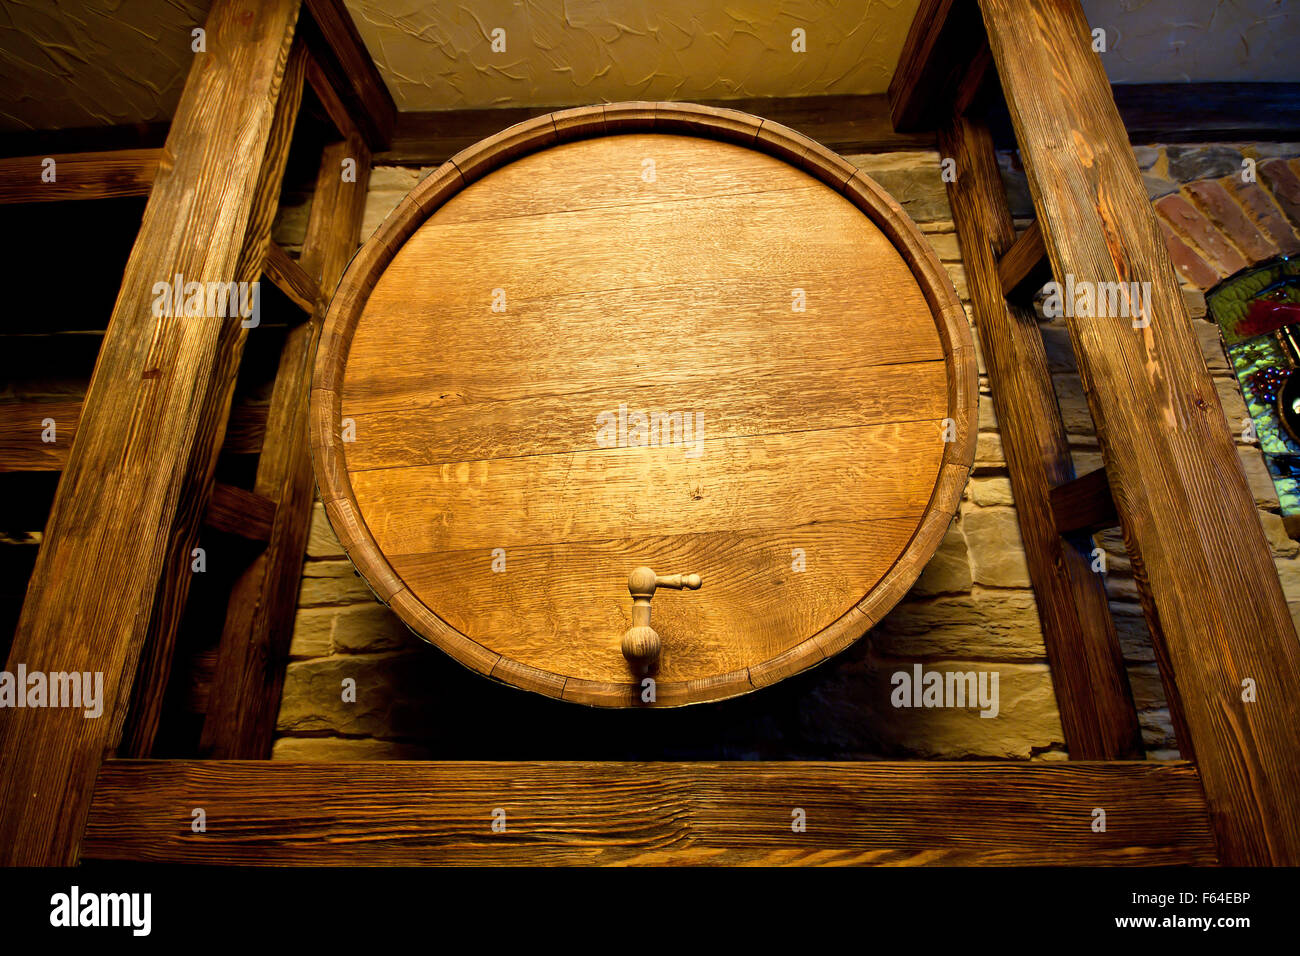 Big wood barrel in old wines cellar Stock Photo